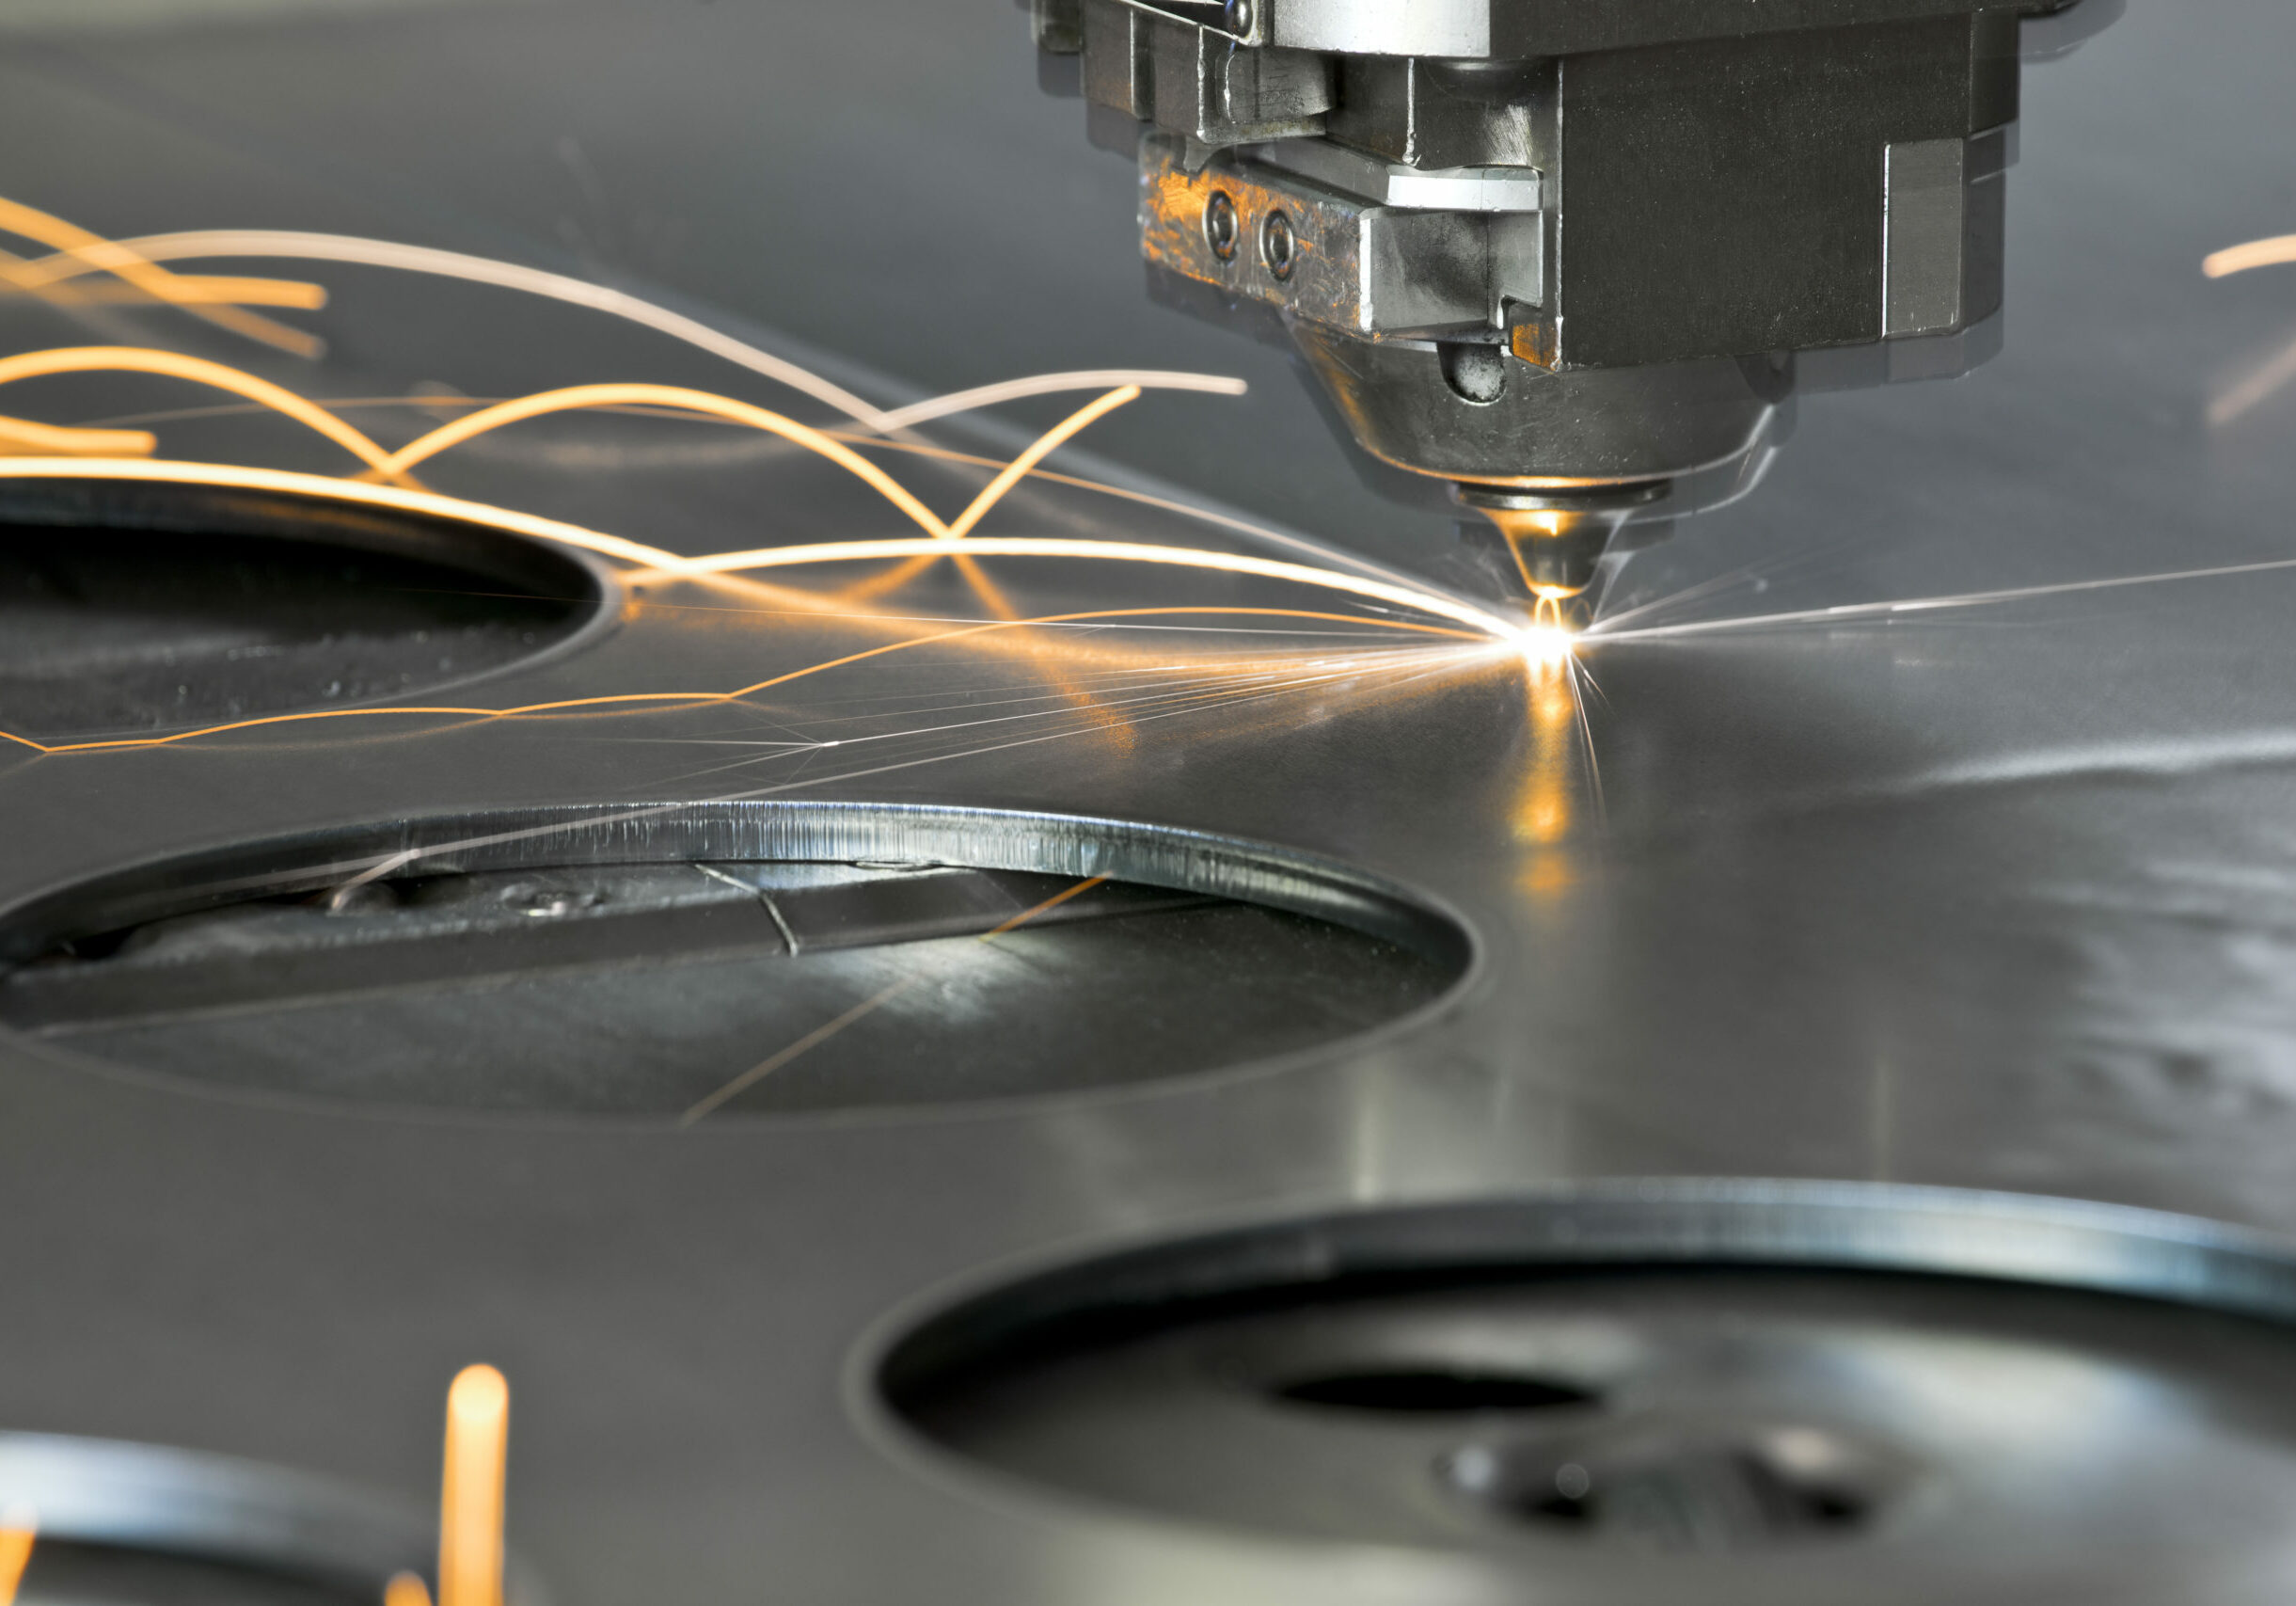 Laser metal cutting manufacturing tool in operation.